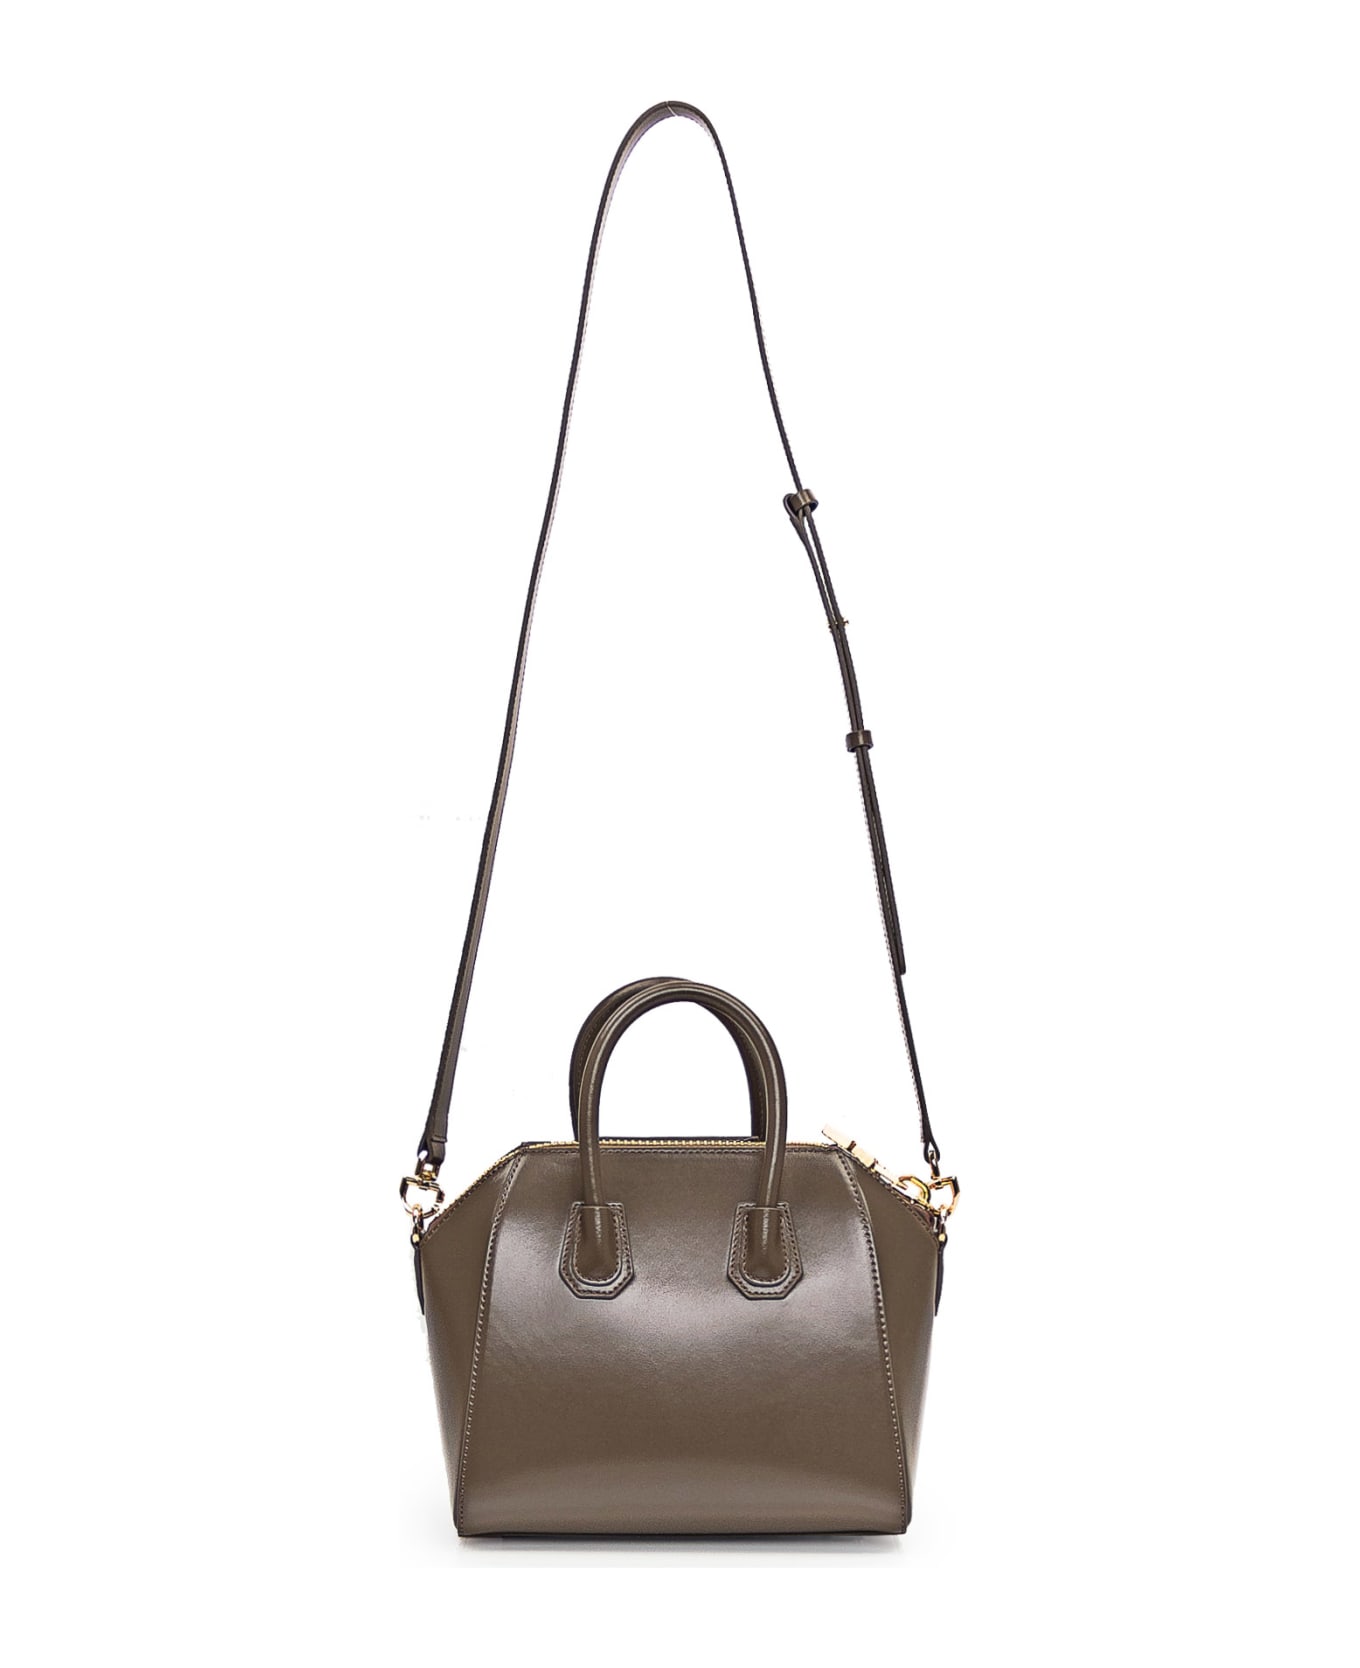 Givenchy Antigona Mini Bag - DOVE